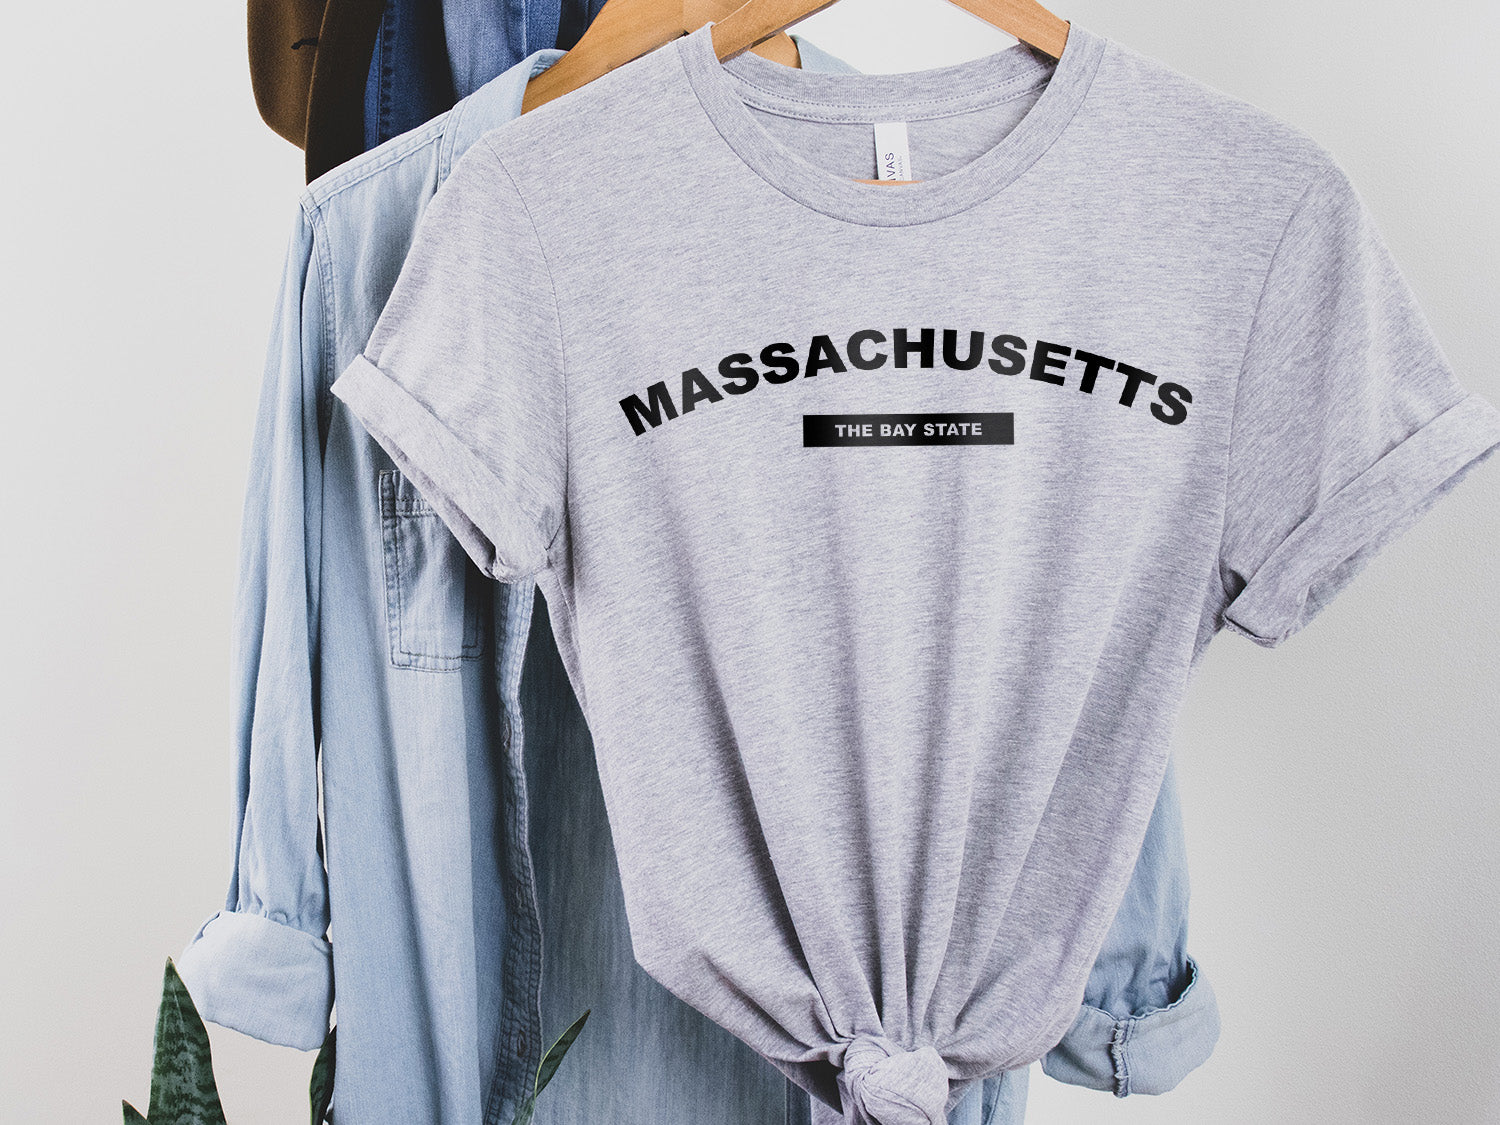 Massachusetts The Bay State T-shirt - United States Name & Slogan Minimal Design Printed Tee Shirt